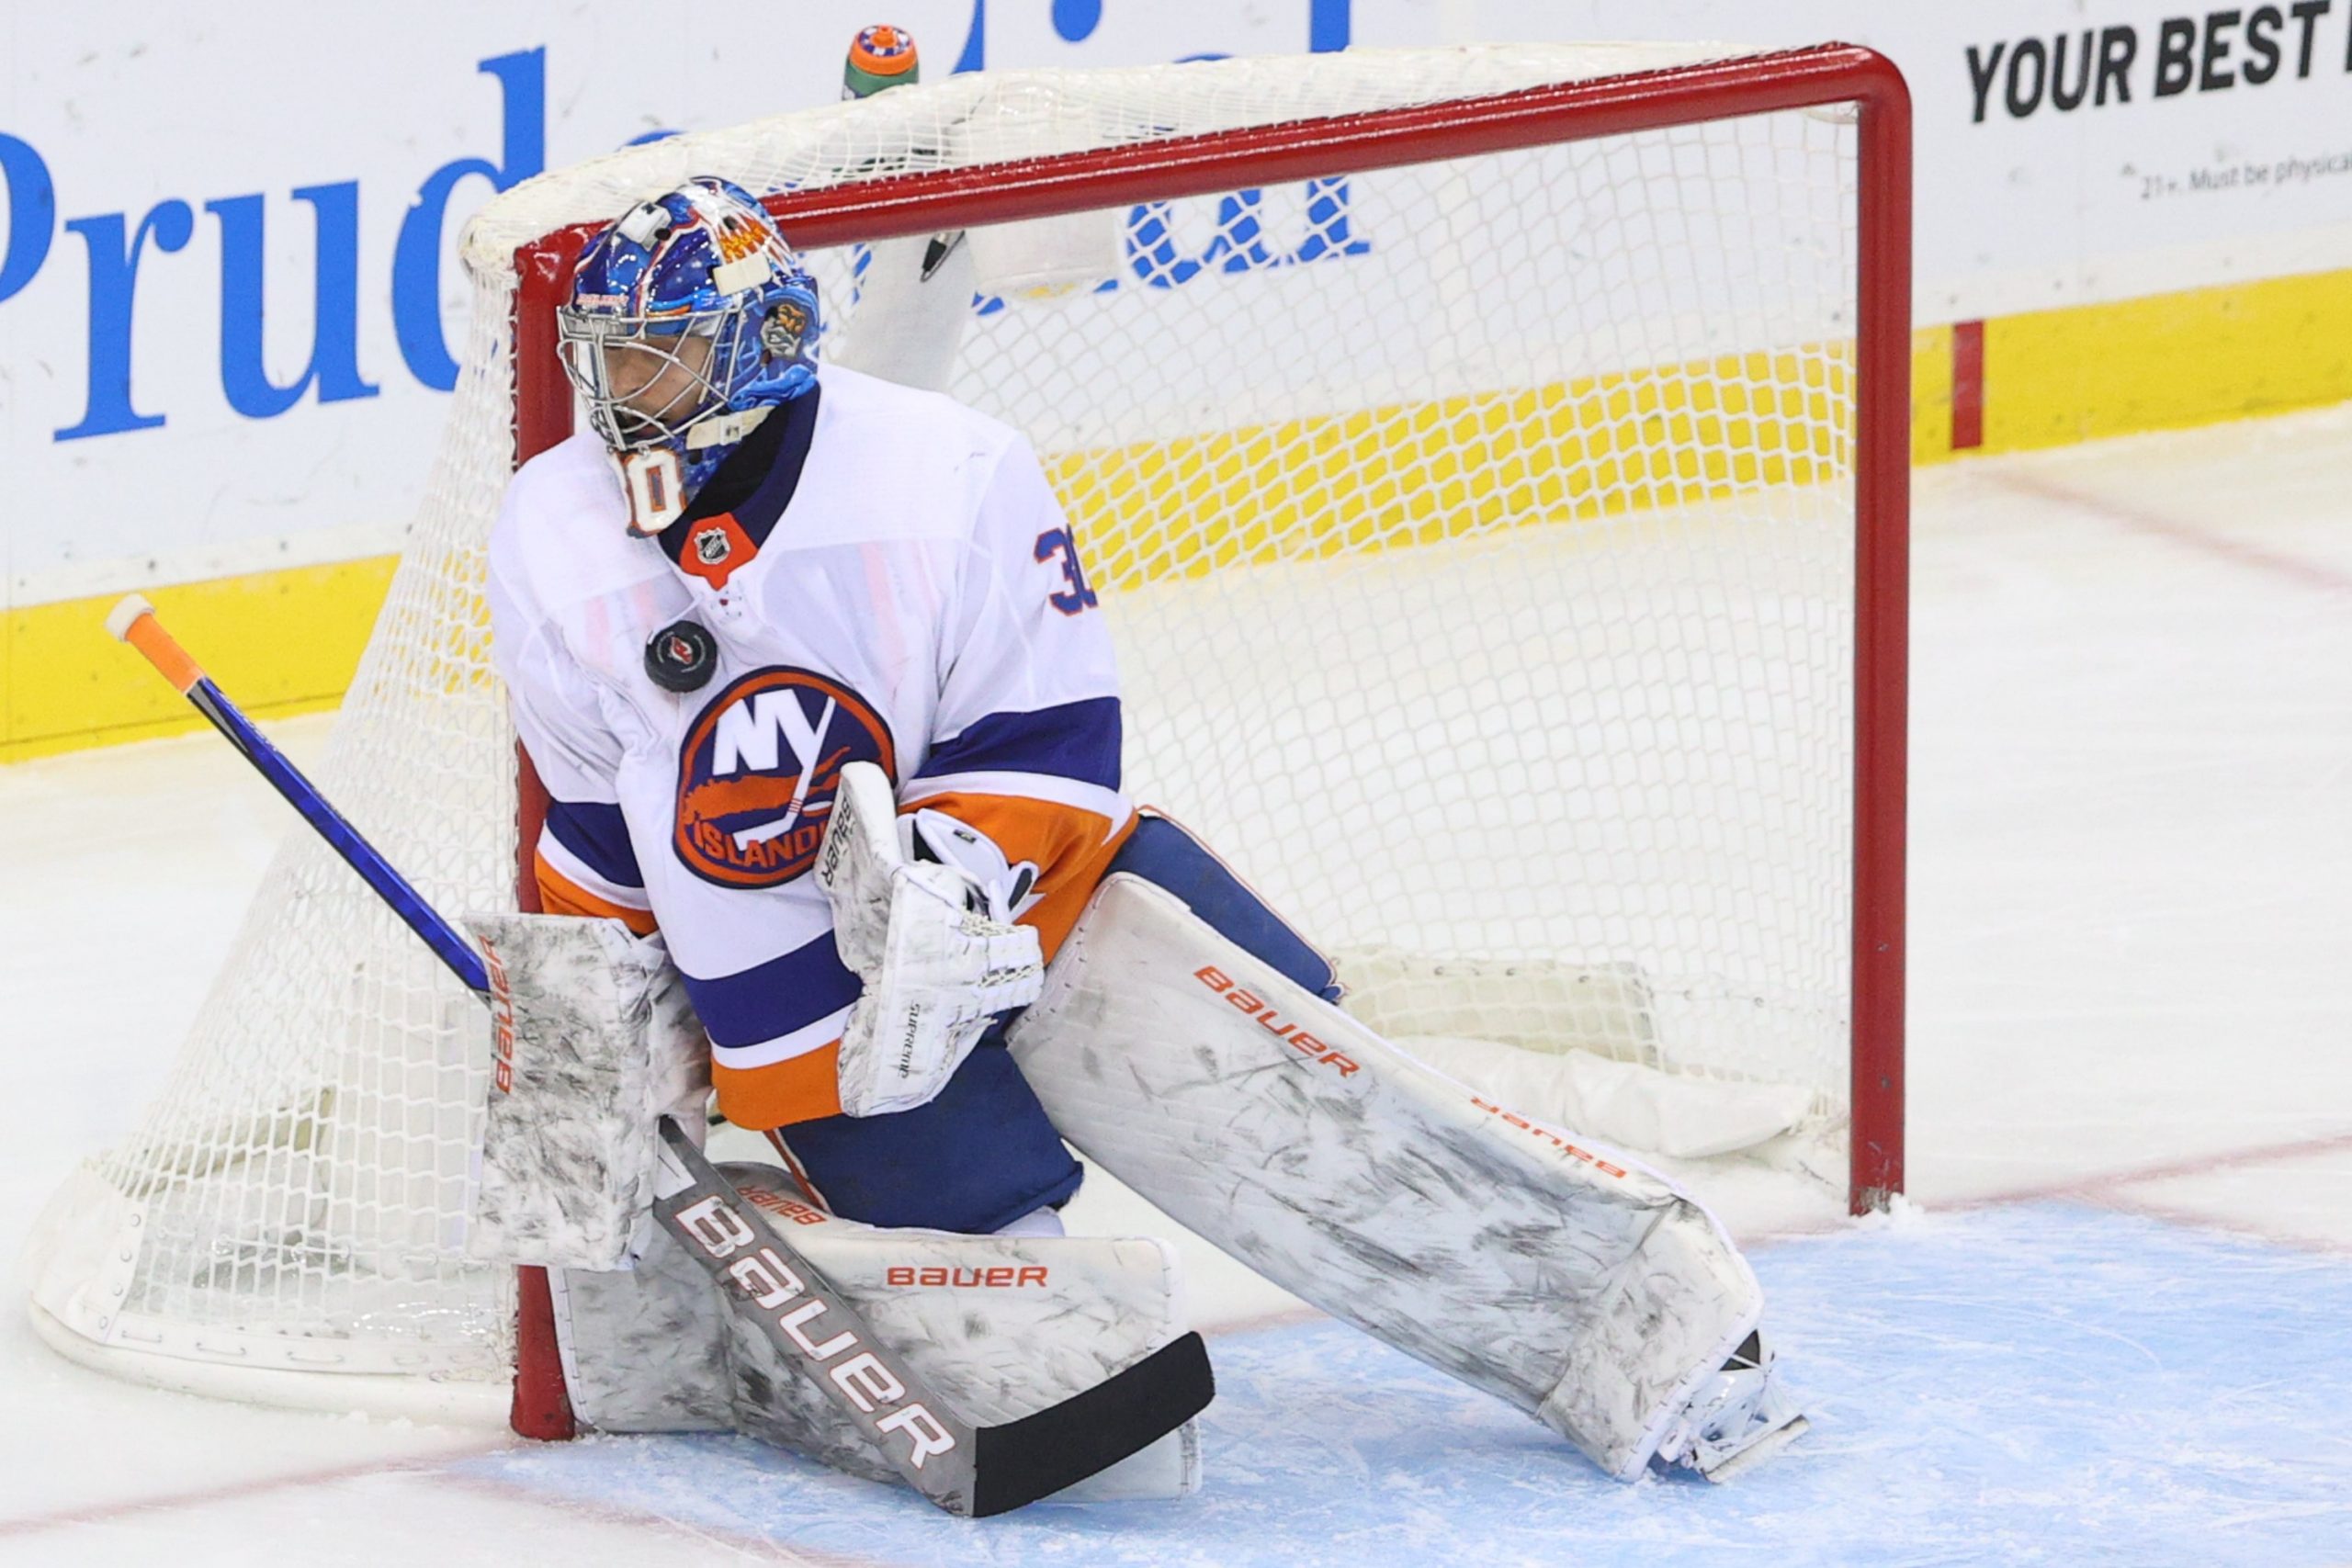 New York Islanders goalie Ilya Sorokin makes a save during game against New Jersey Devils